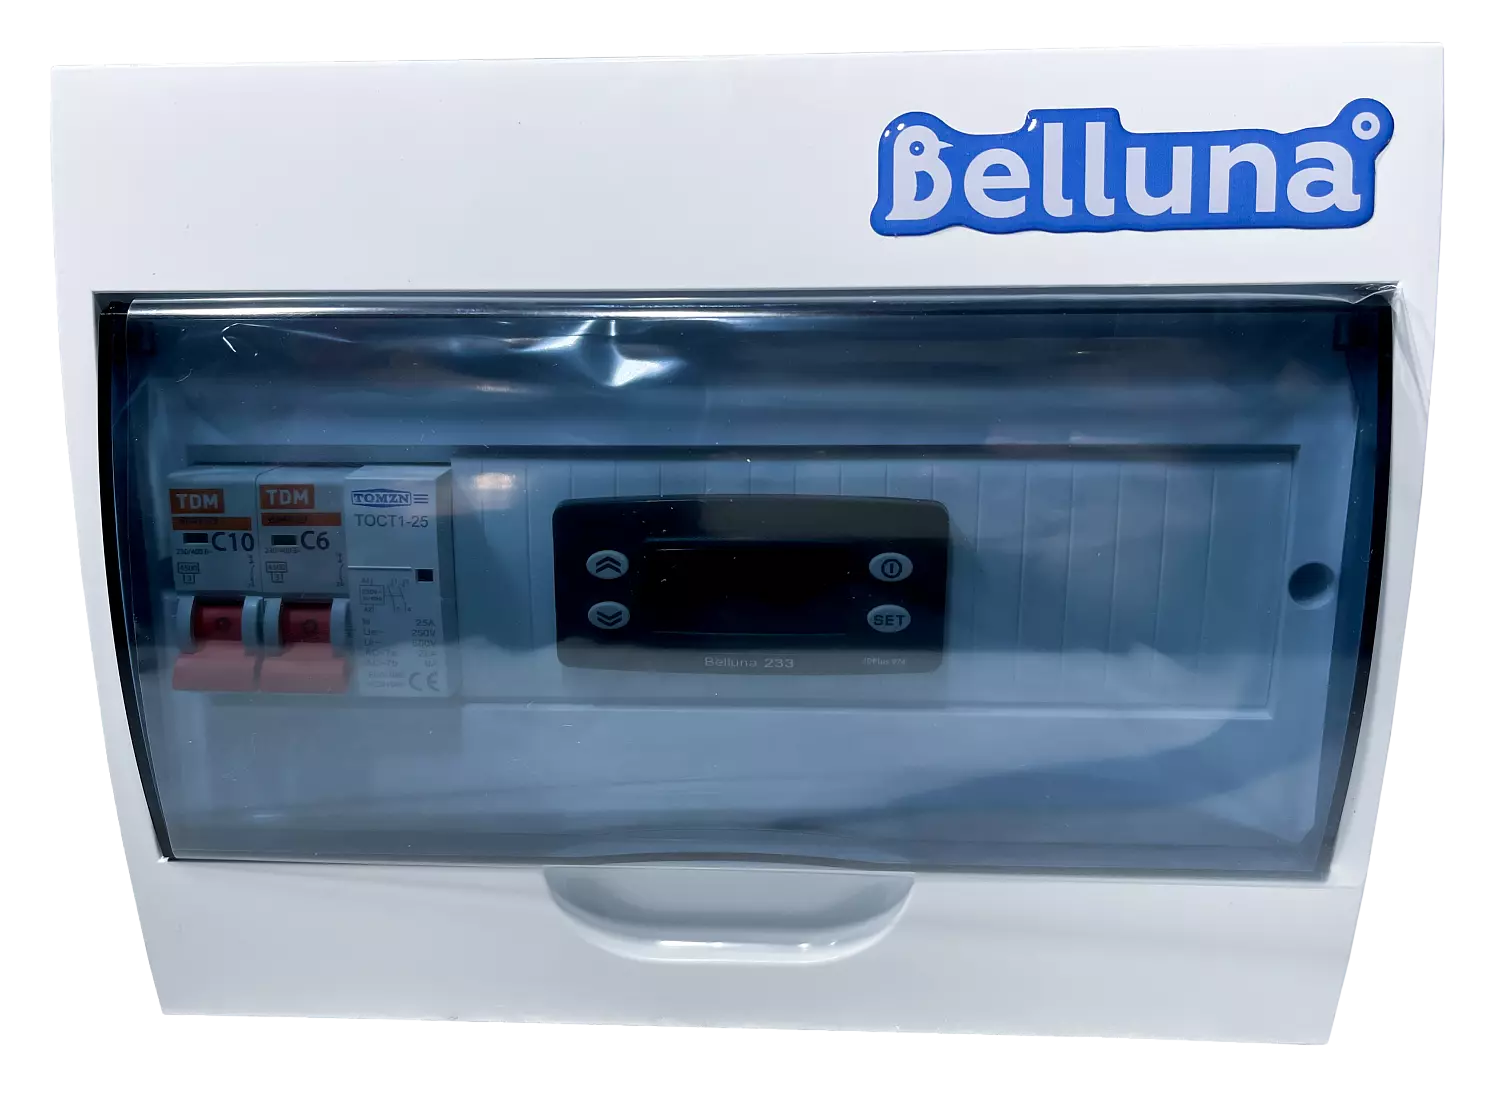 сплит-система Belluna U102-1 Краснодар